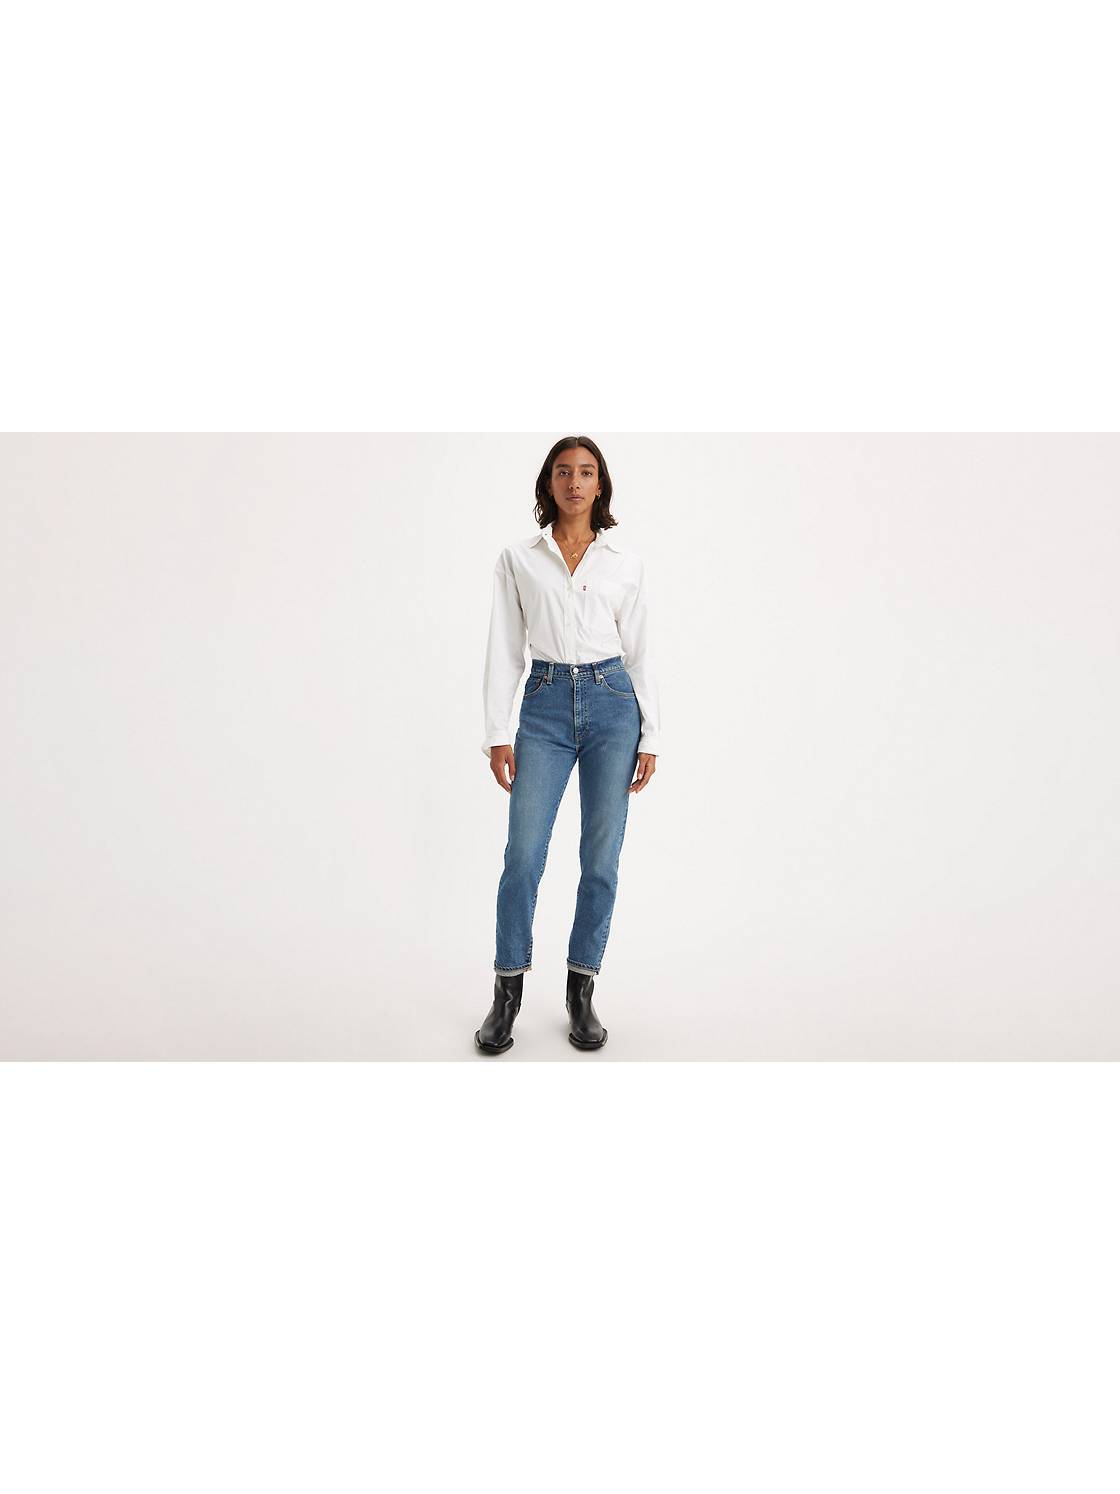 Jeans For Women - Shop All Levi's® Women's Jeans